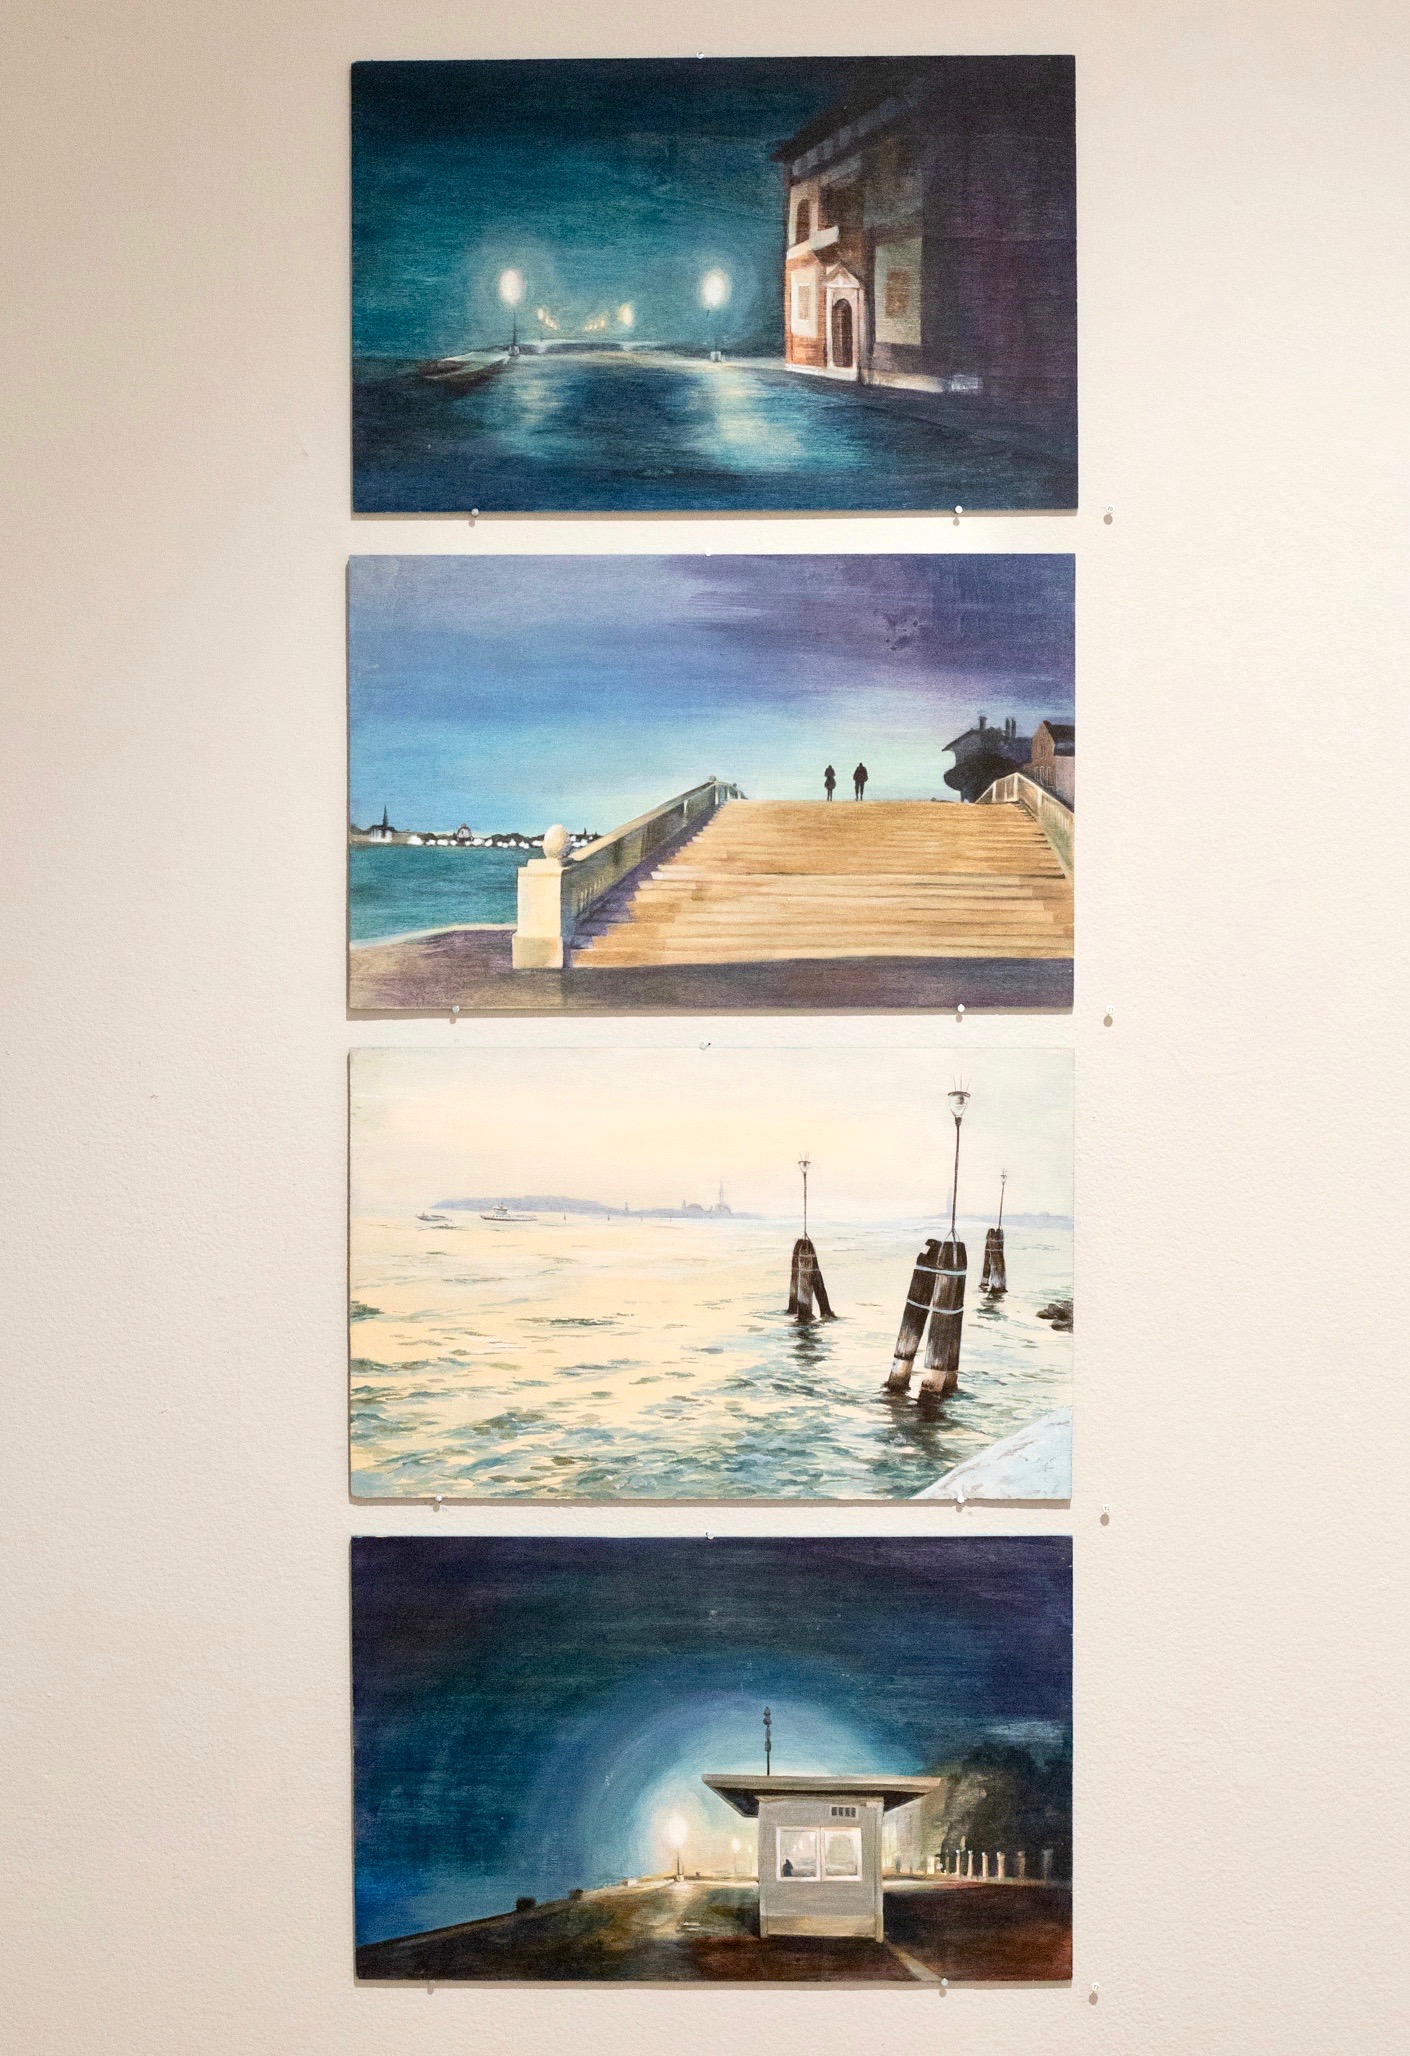  Installation view:  Exempla   Four Venetian studies, each 25 cm x 40 cm  Egg tempera on wood 